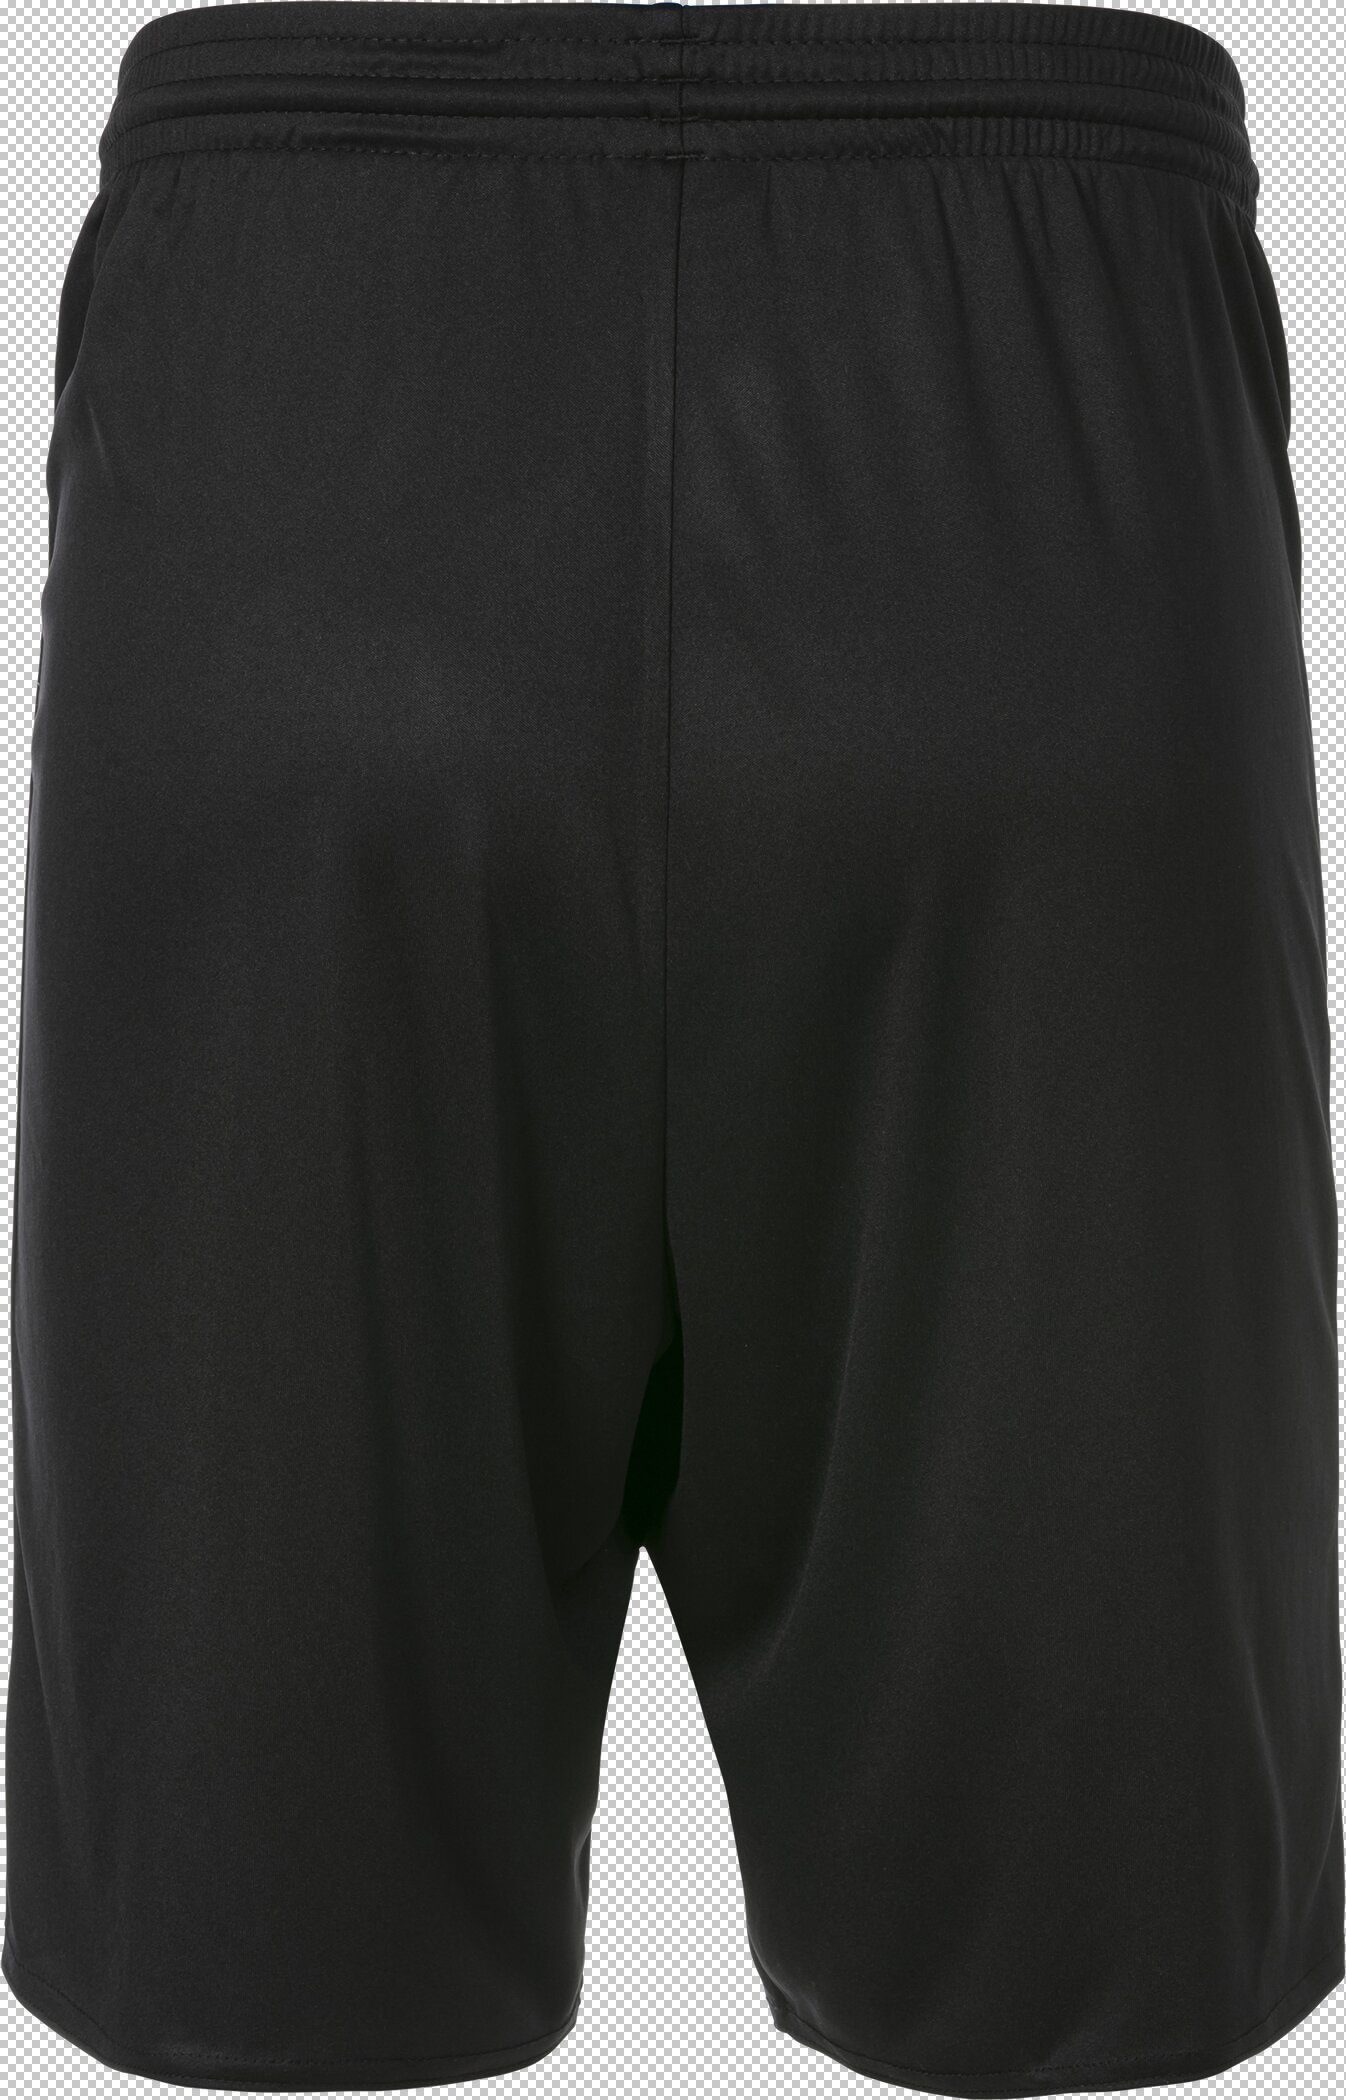 Manchester Sporthose schwarz/weiý Jako 2.0 Shorts